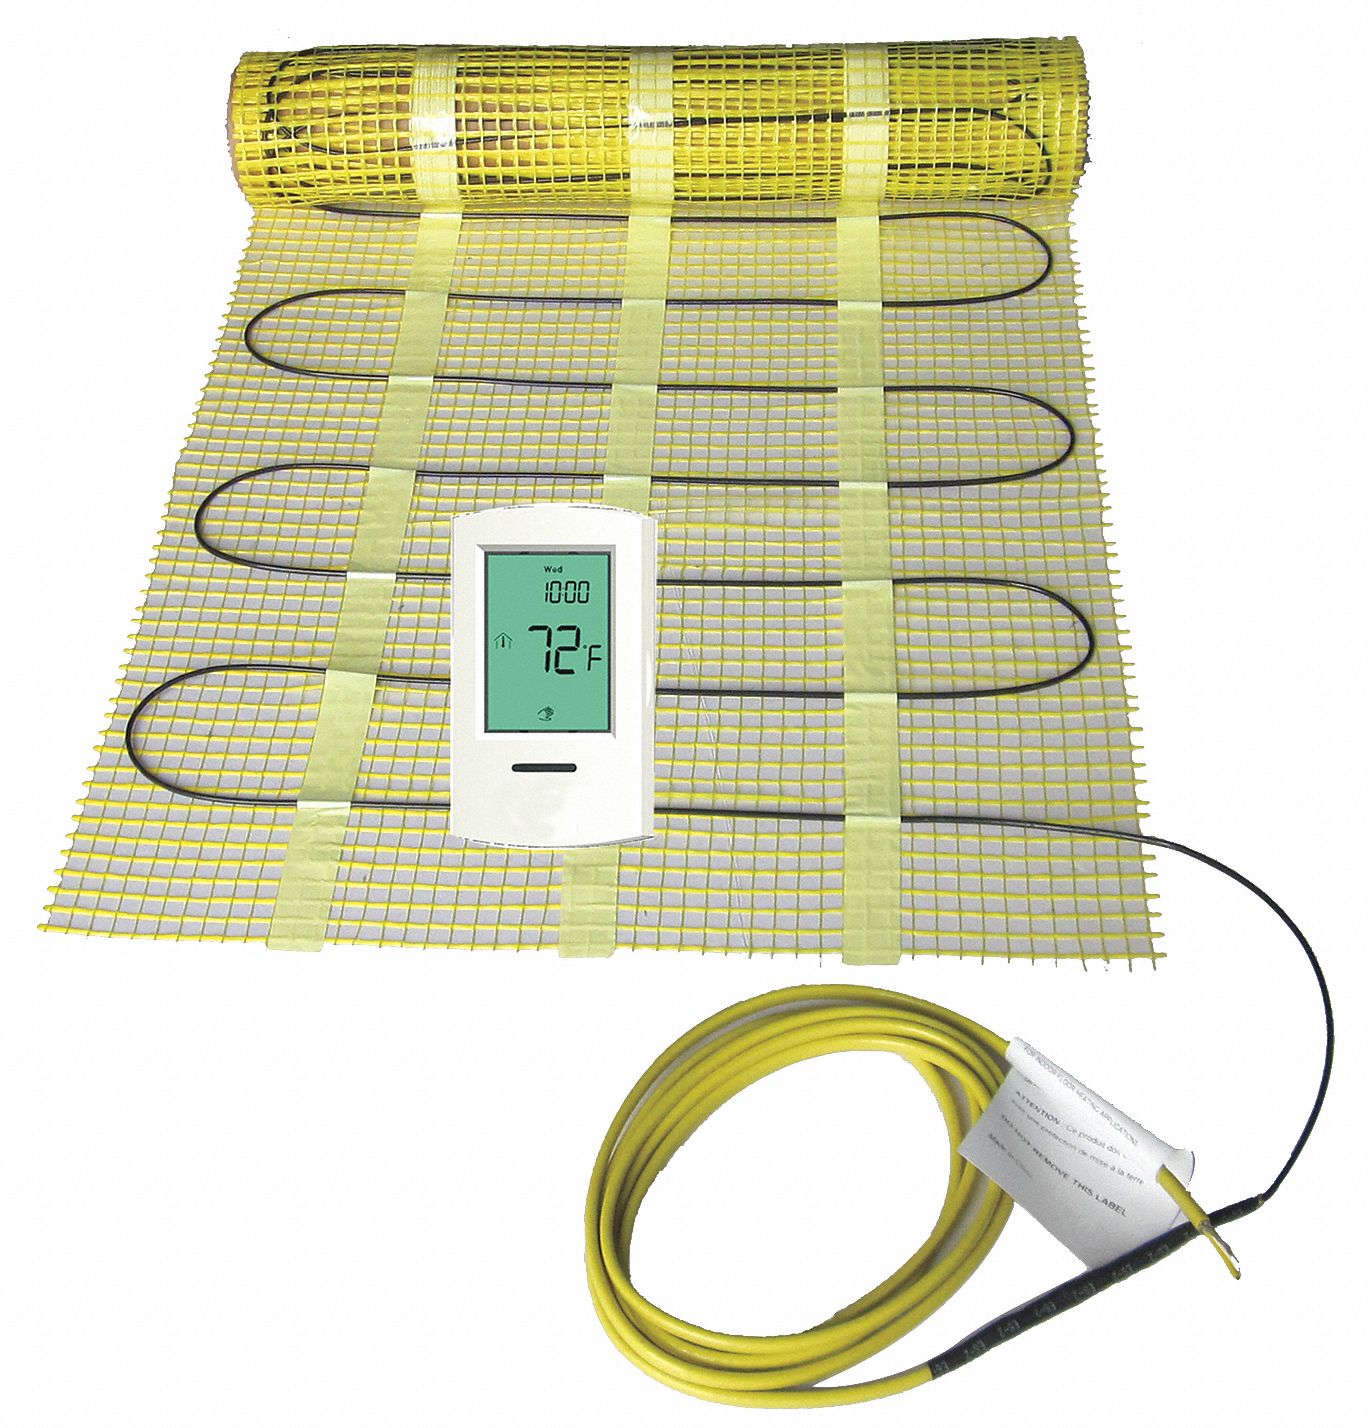 6MJV6 - Electric Floor Heating Kit 10 sq. ft.